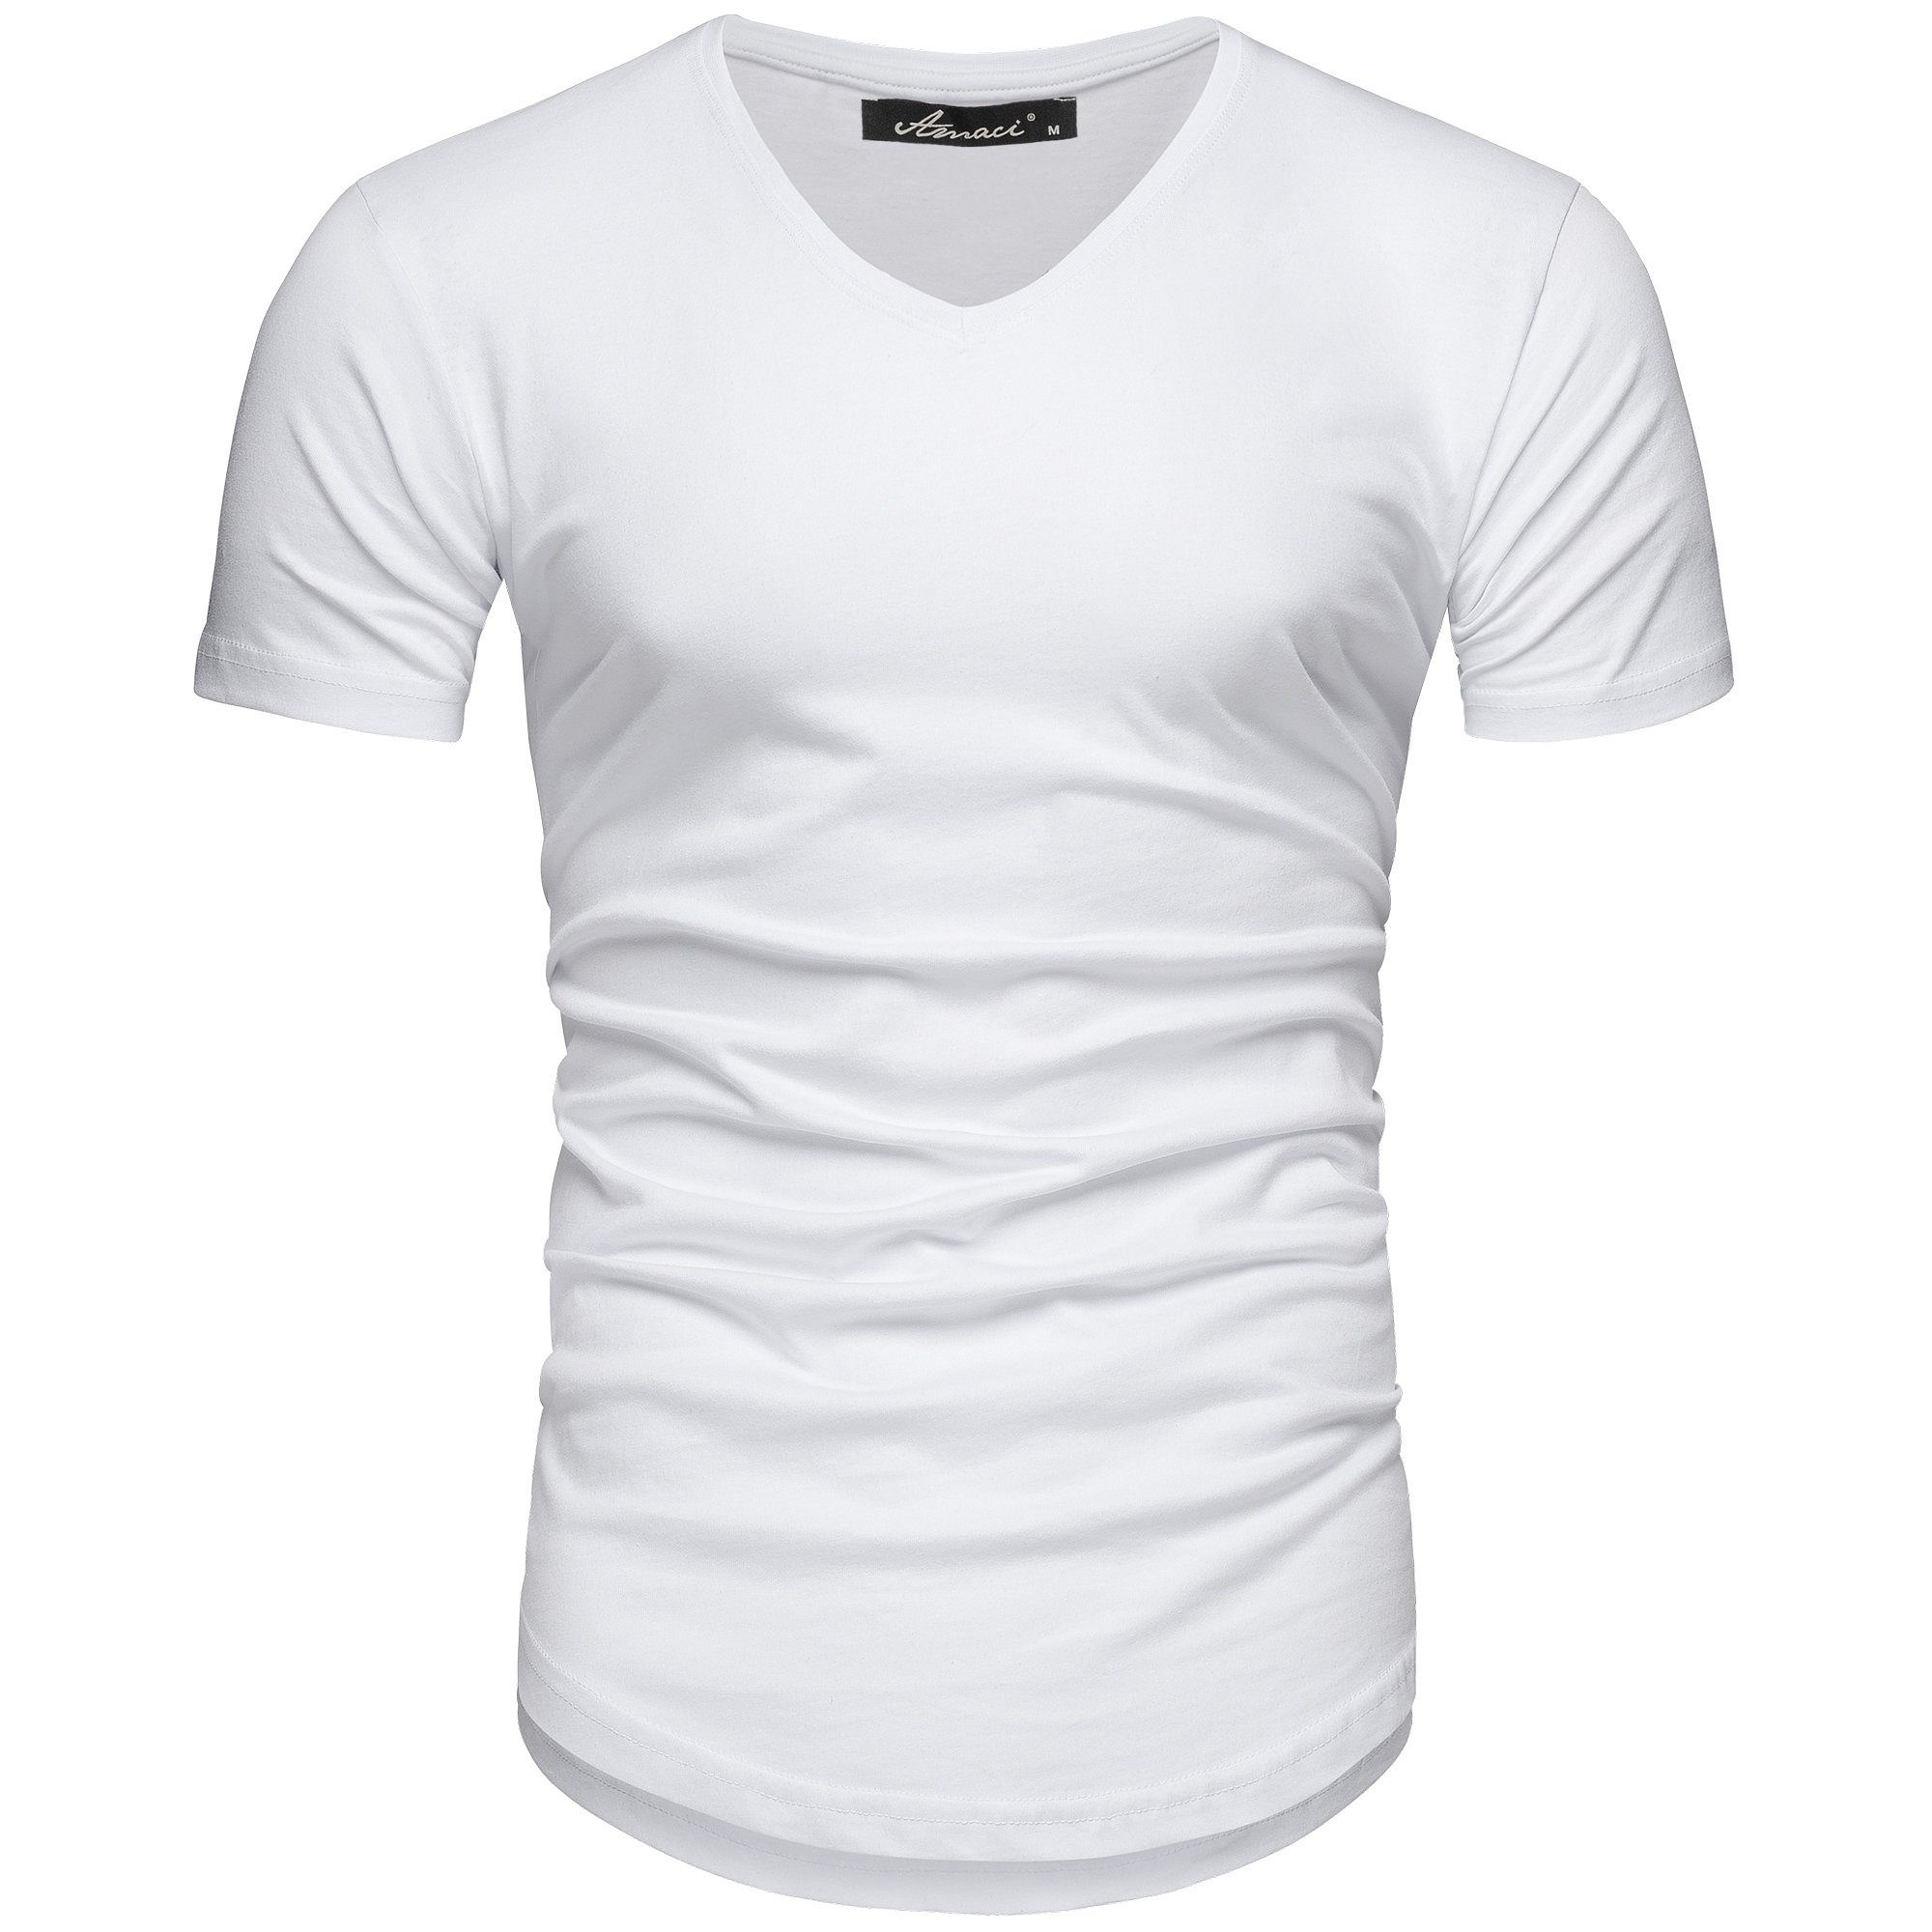 Amaci&Sons T-Shirt BELLEVUE Basic Oversize T-Shirt mit V-Ausschnitt Herren Oversize Vintage V-Neck Basic V-Ausschnitt Shirt